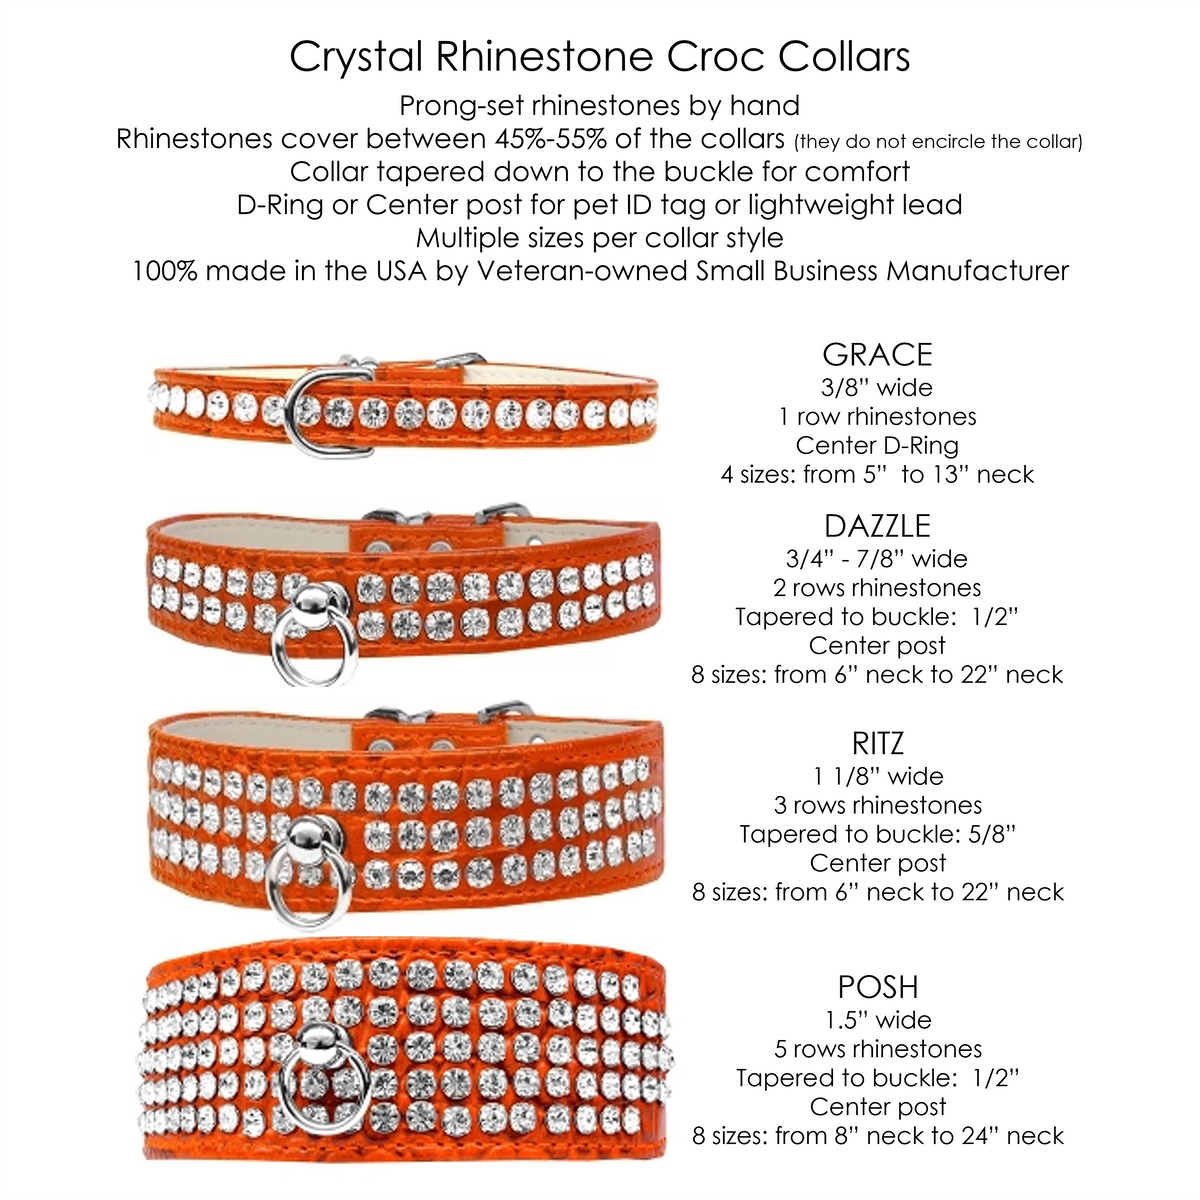 Ritz 3-row Crystal Faux Croc Dog Collar - Orange - 3 Red Rovers